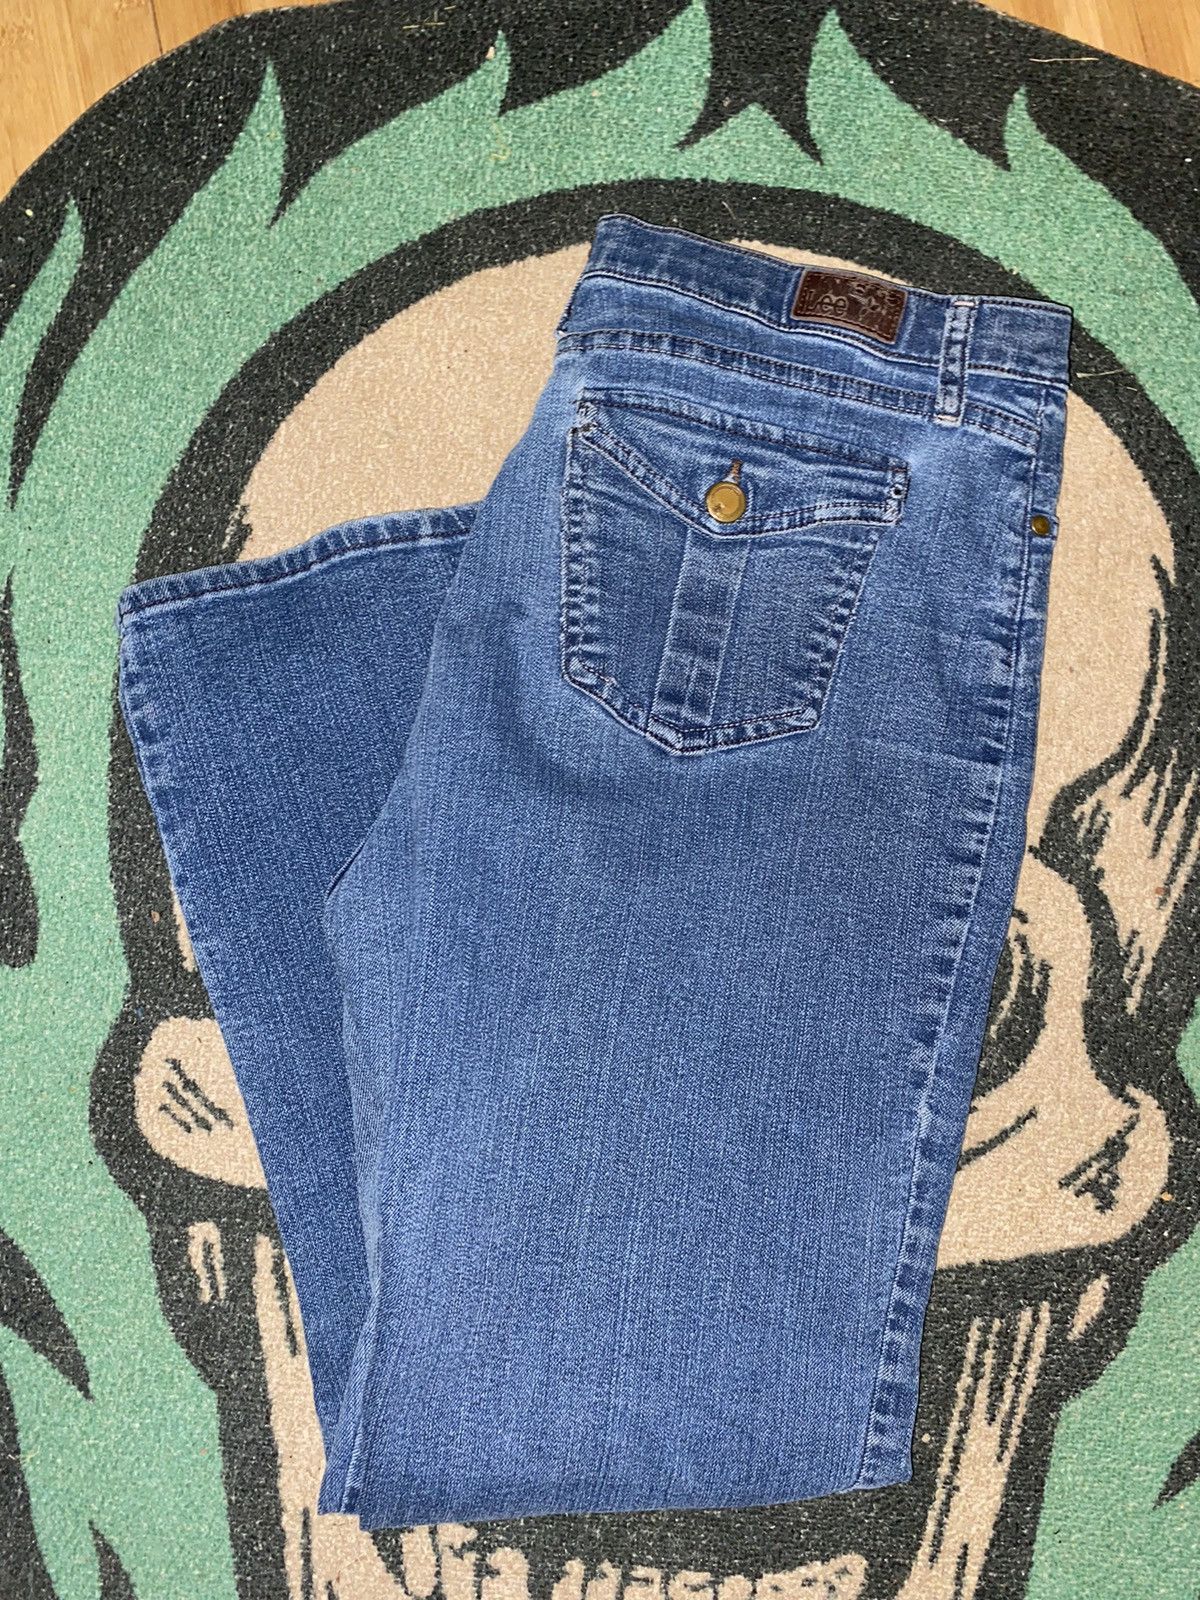 Vintage Lee Jeans 90s Classic Fit | Grailed